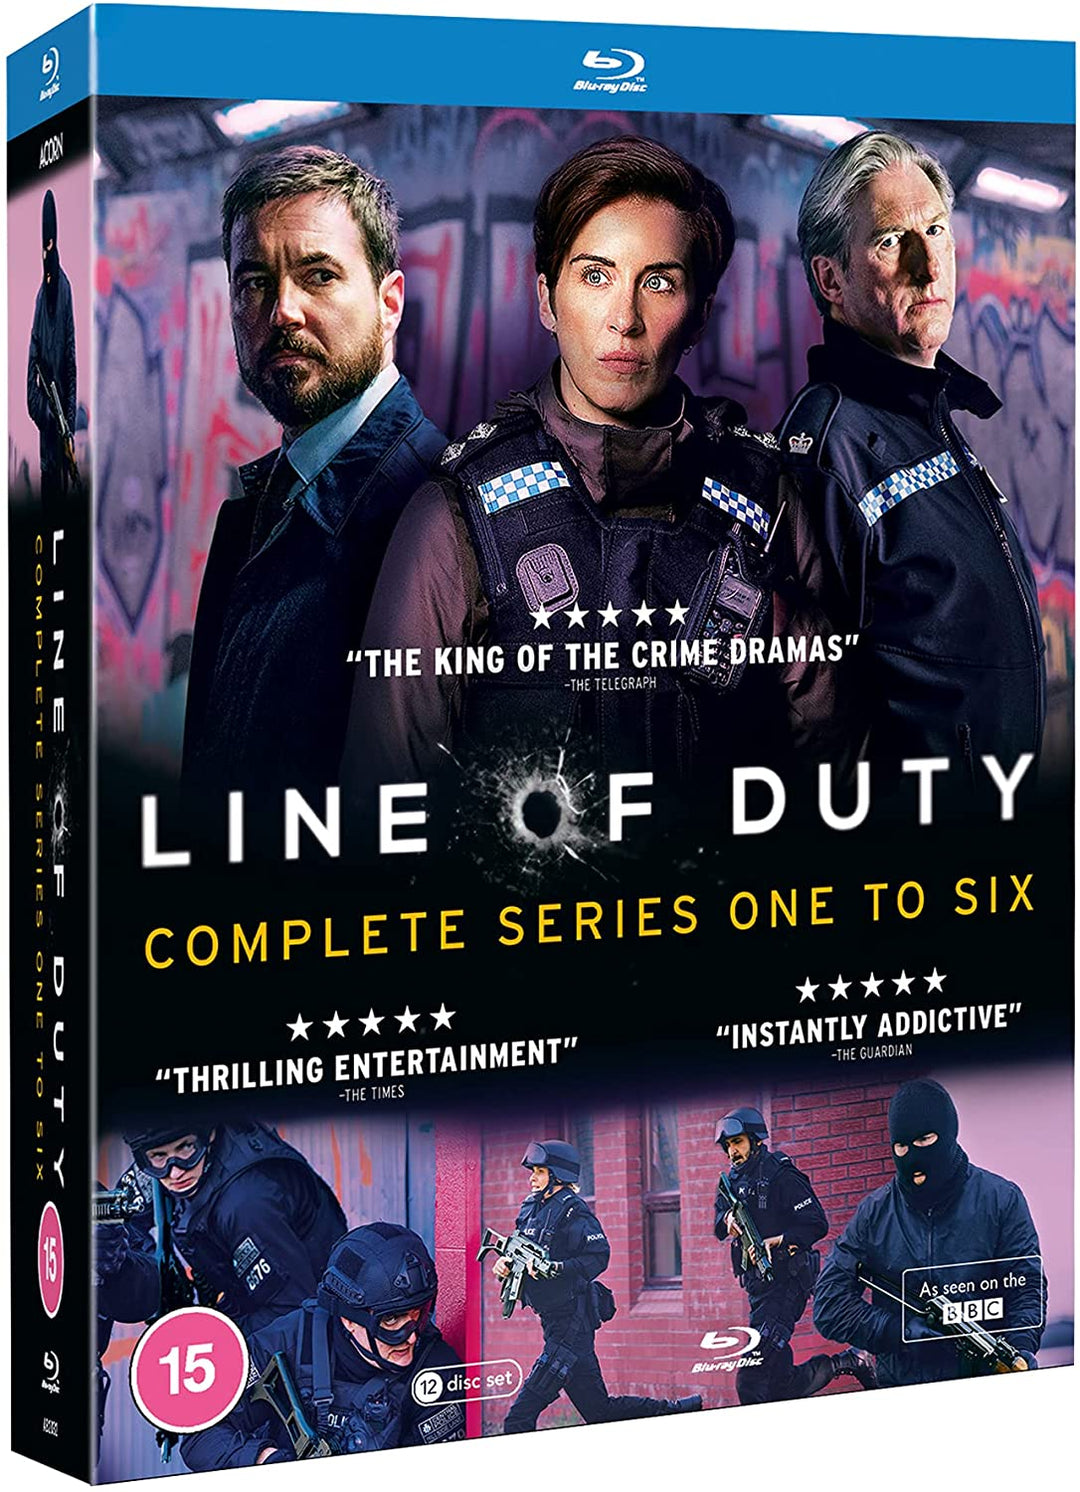 Line of Duty - Series 1-6 Complete Box Set [Blu-ray] - Drama [Blu-ray]